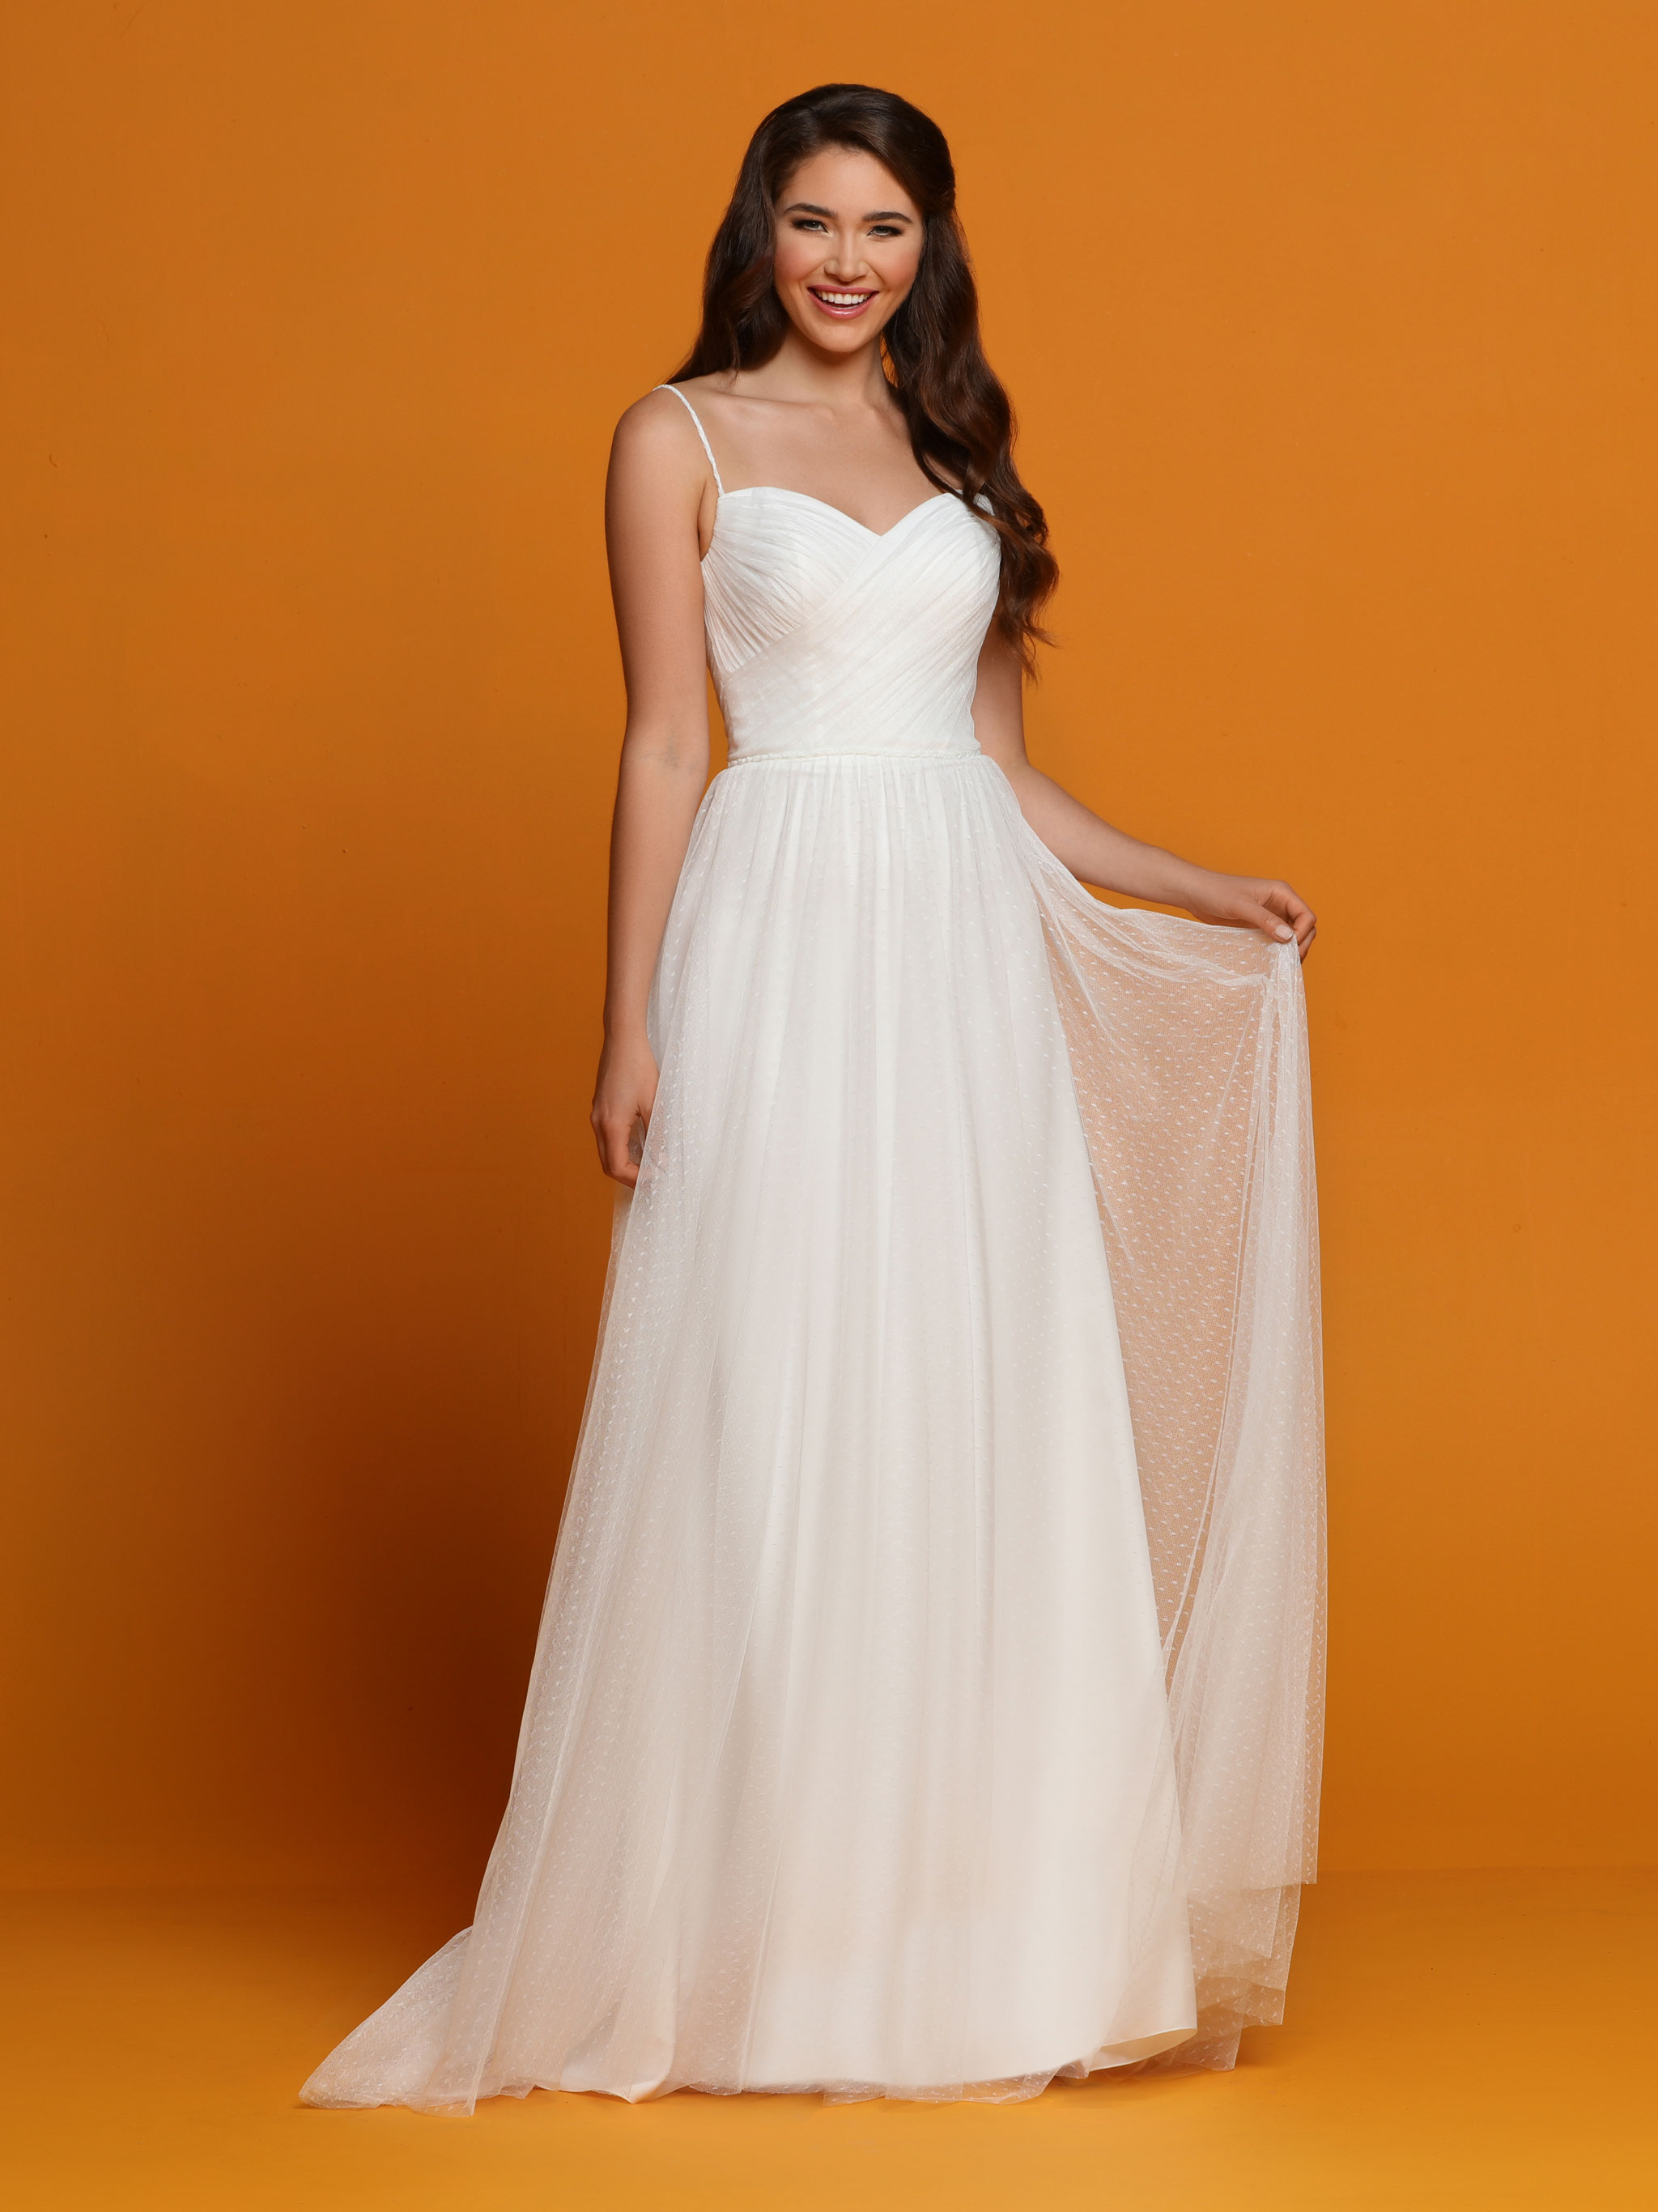 What Kind Of Slip Should You Wear Under A Wedding Dress - Florianni Weddings